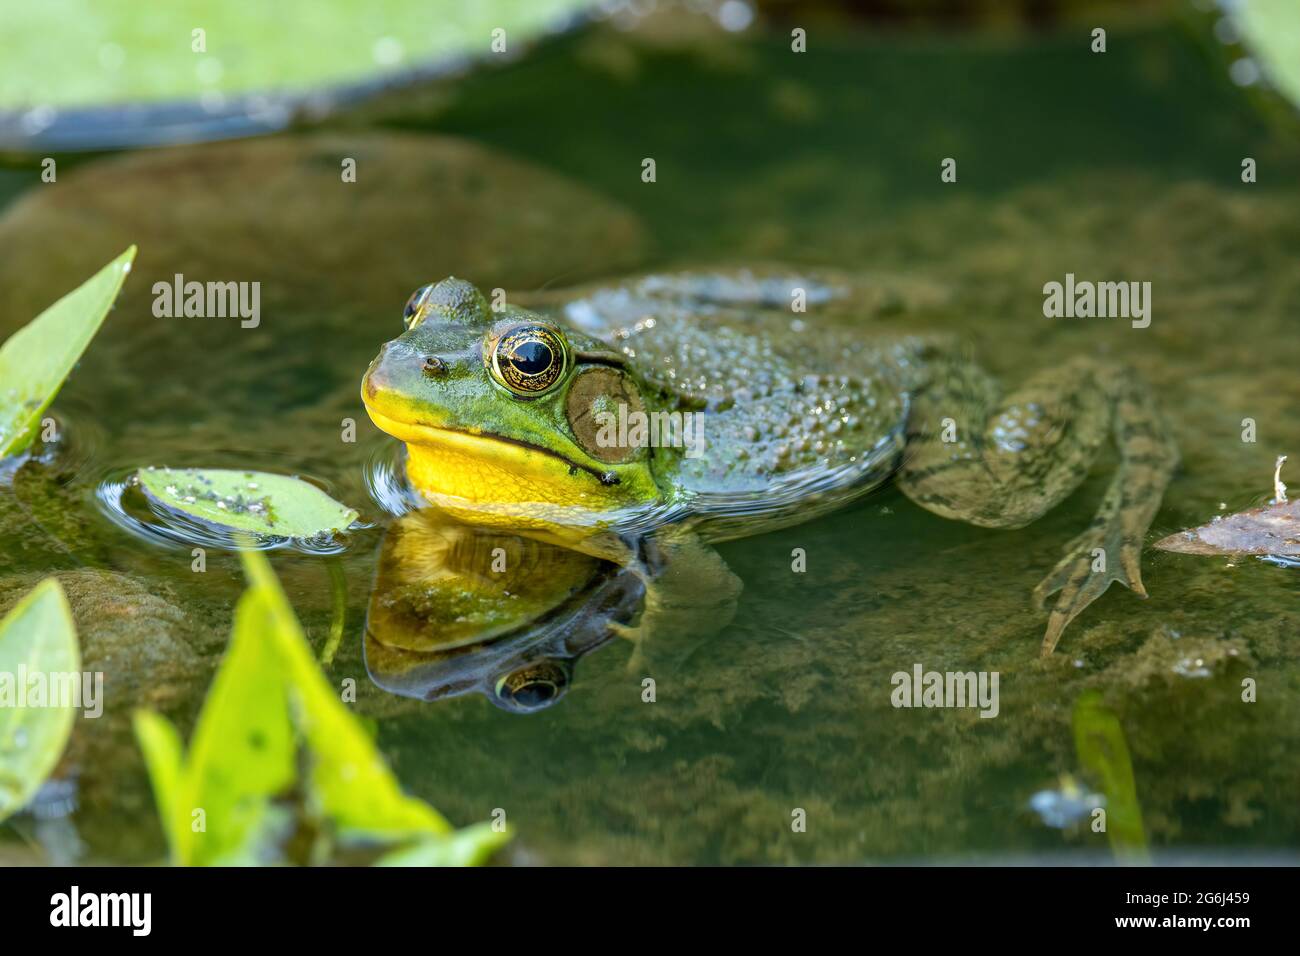 Green frog in backyard pond Stock Photo